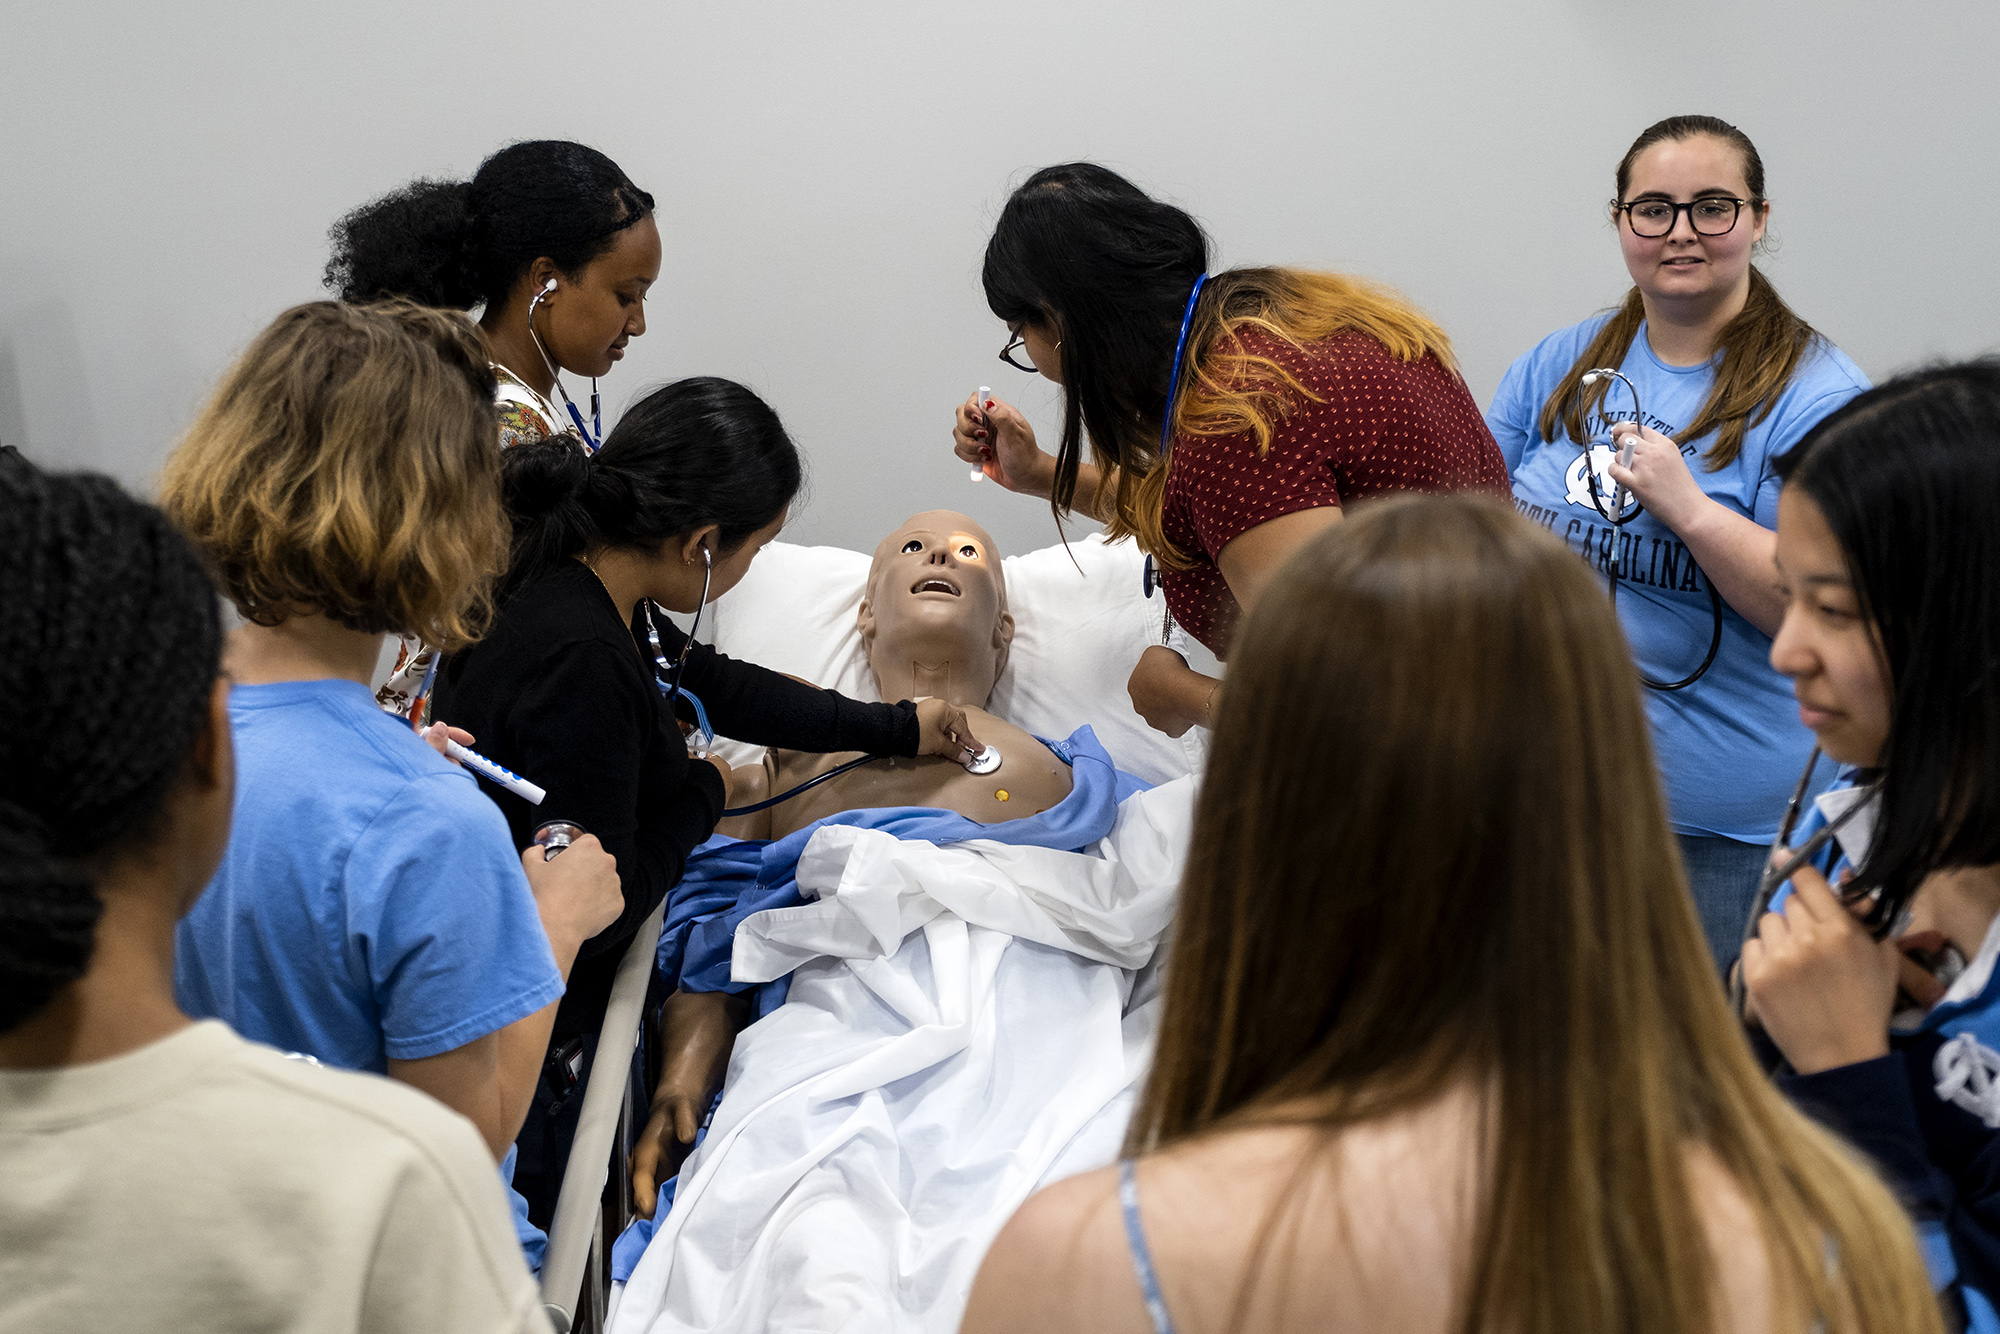 Nursing students crowd around a practice dummy on a stretcher.